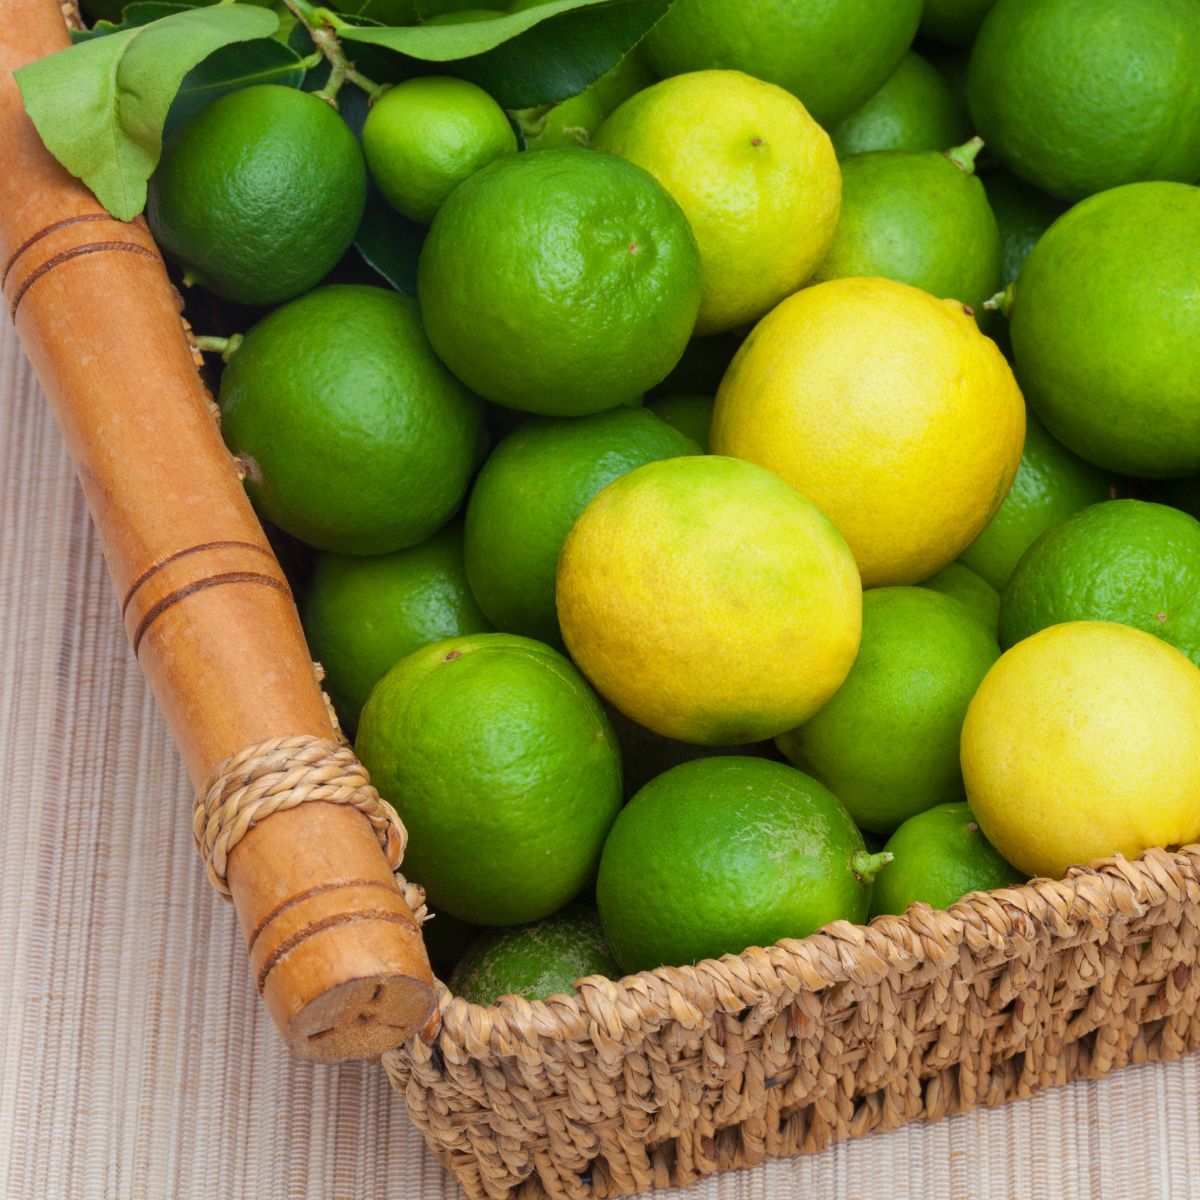 Key limes in a basket.